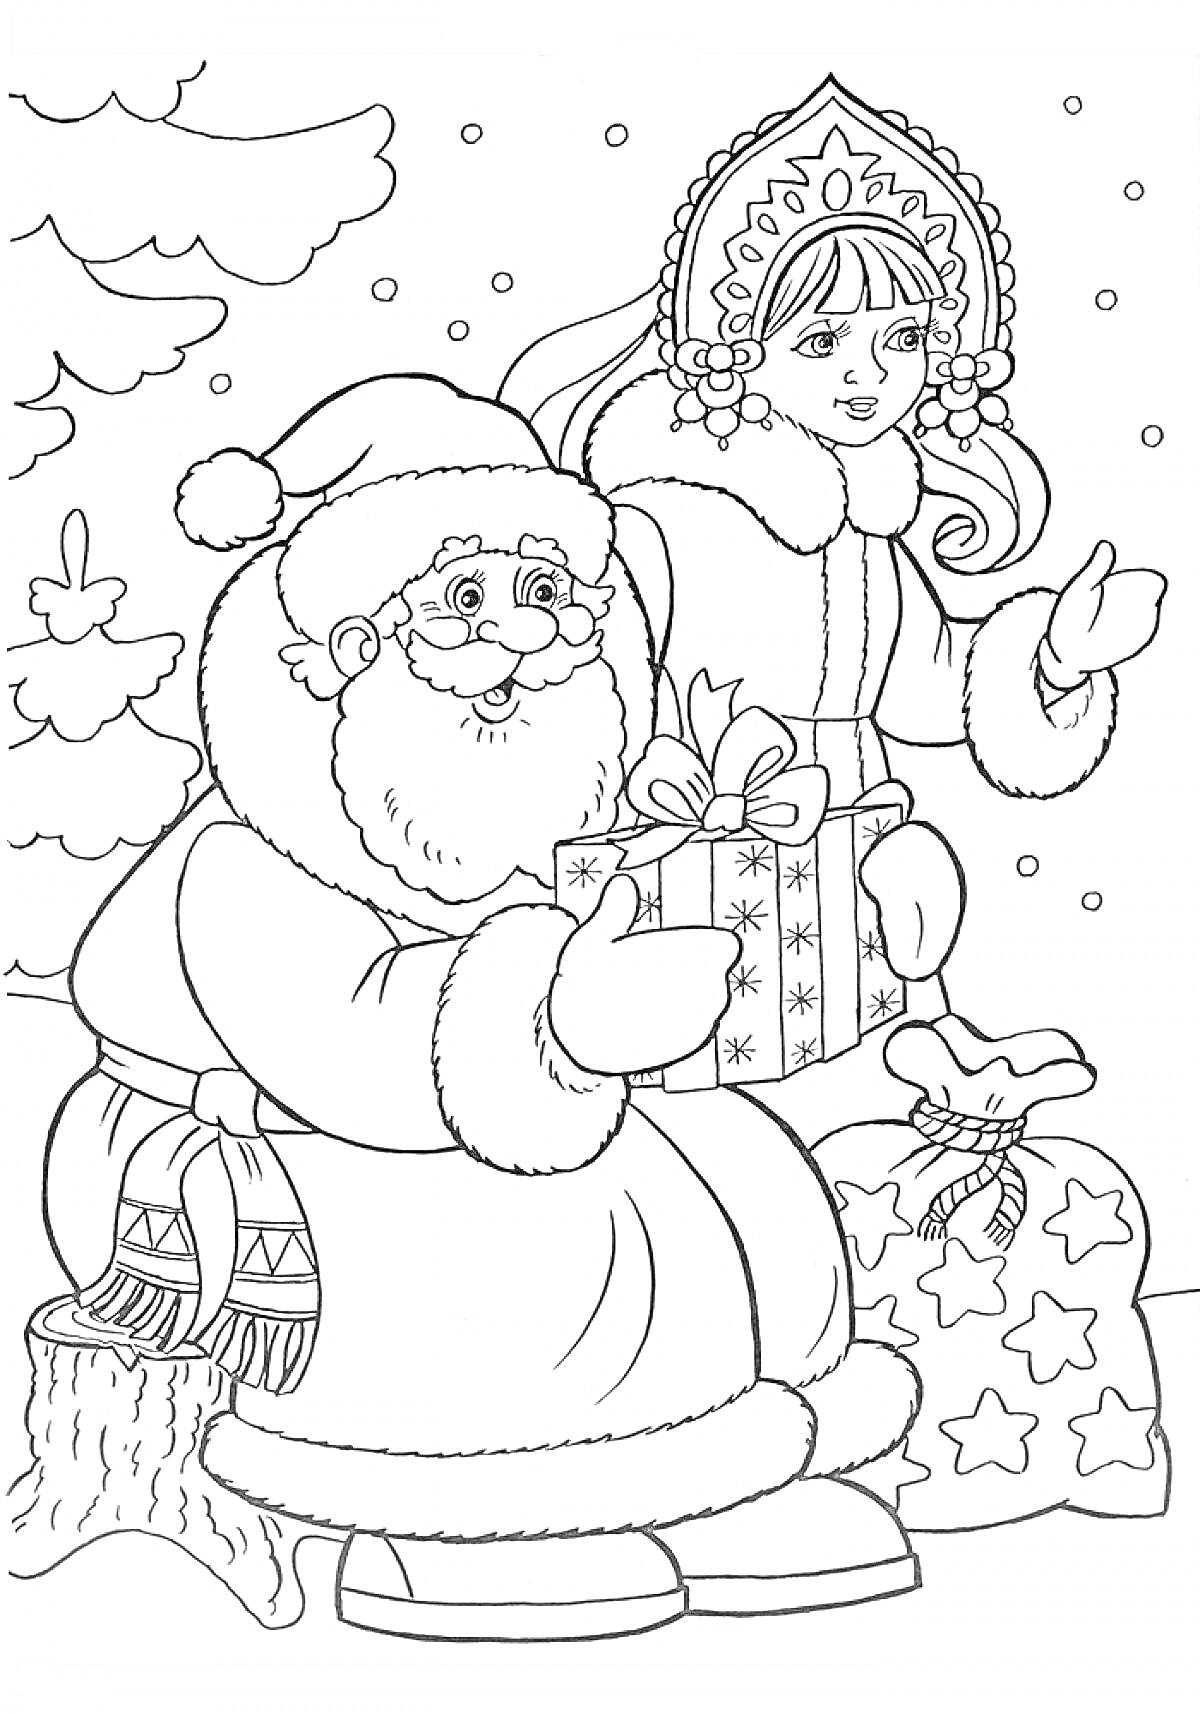 Дед Мороз и Снегурочка с подарками возле елки и сугроба